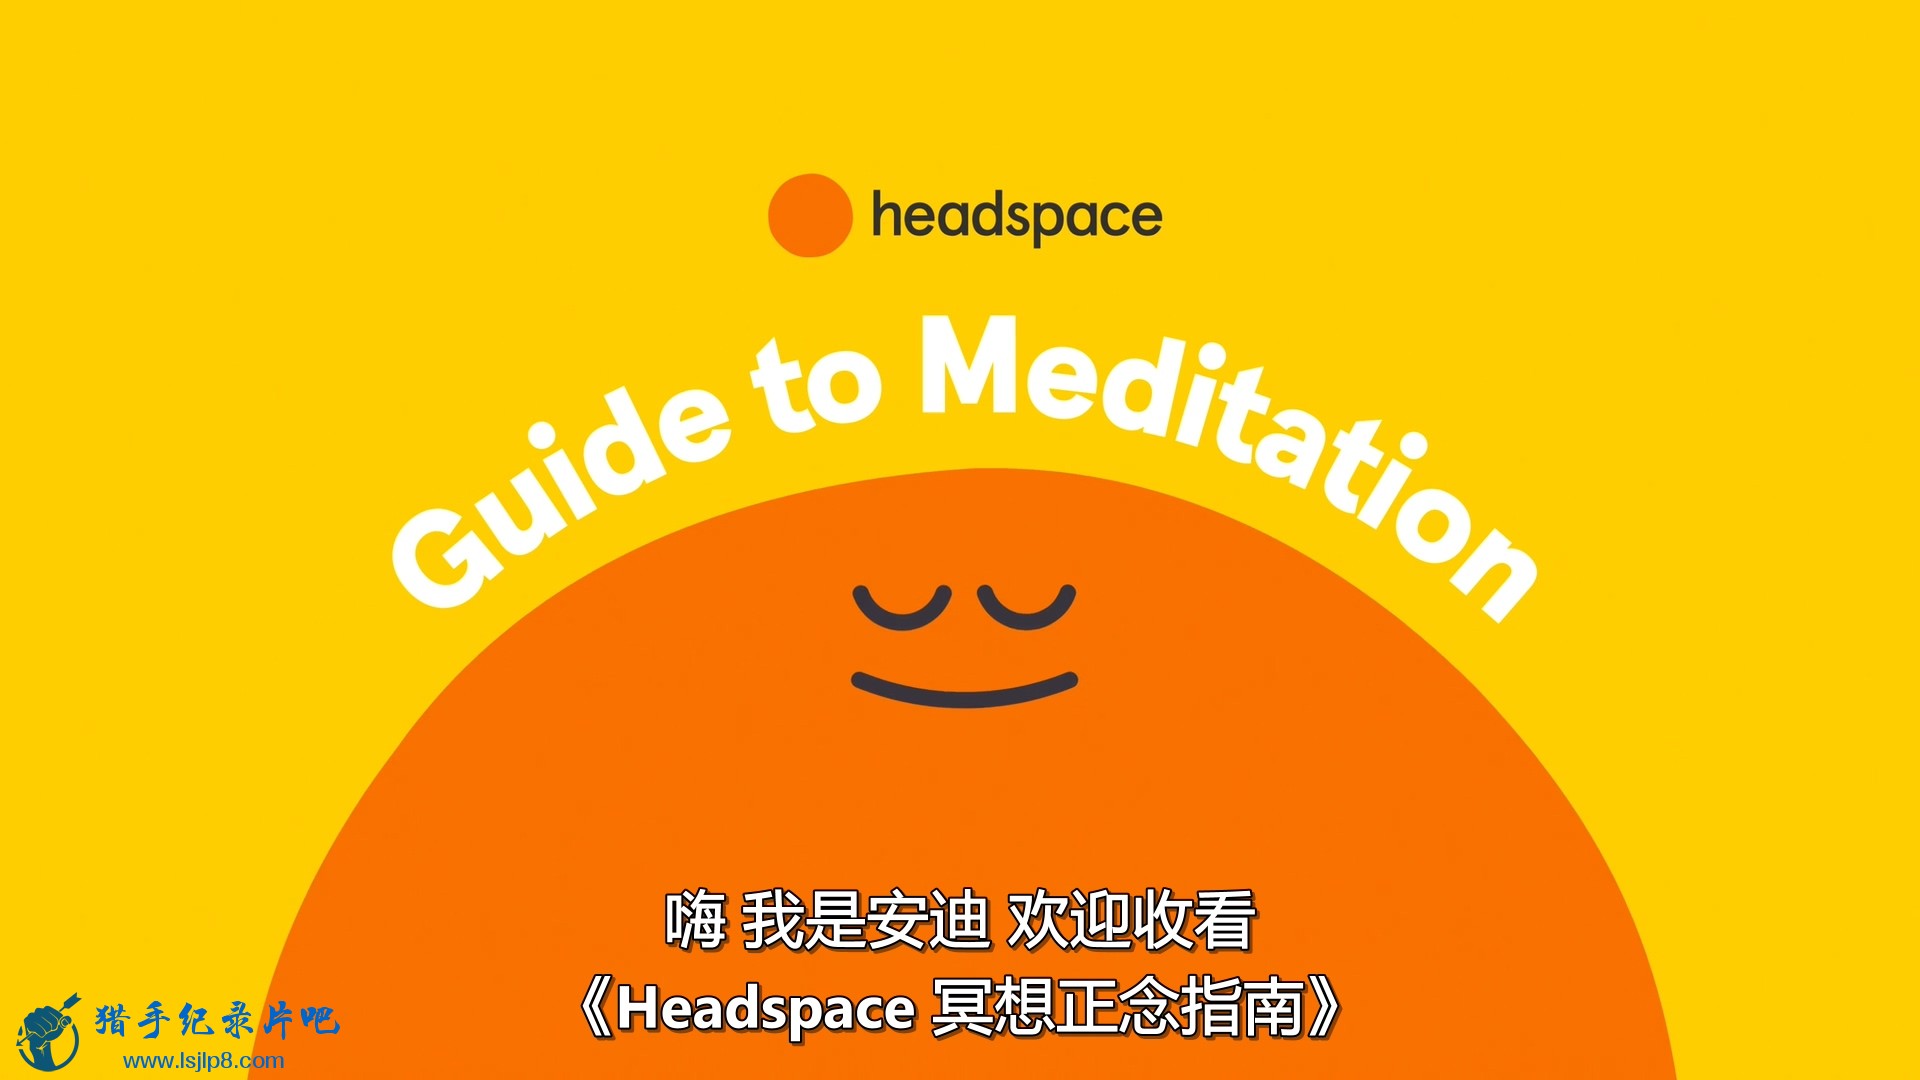 Headspace.Guide.To.Meditation.S01E01.1080p.NF.WEB-DL.DDP5.1.x264-WELP.mkv_202112.jpg